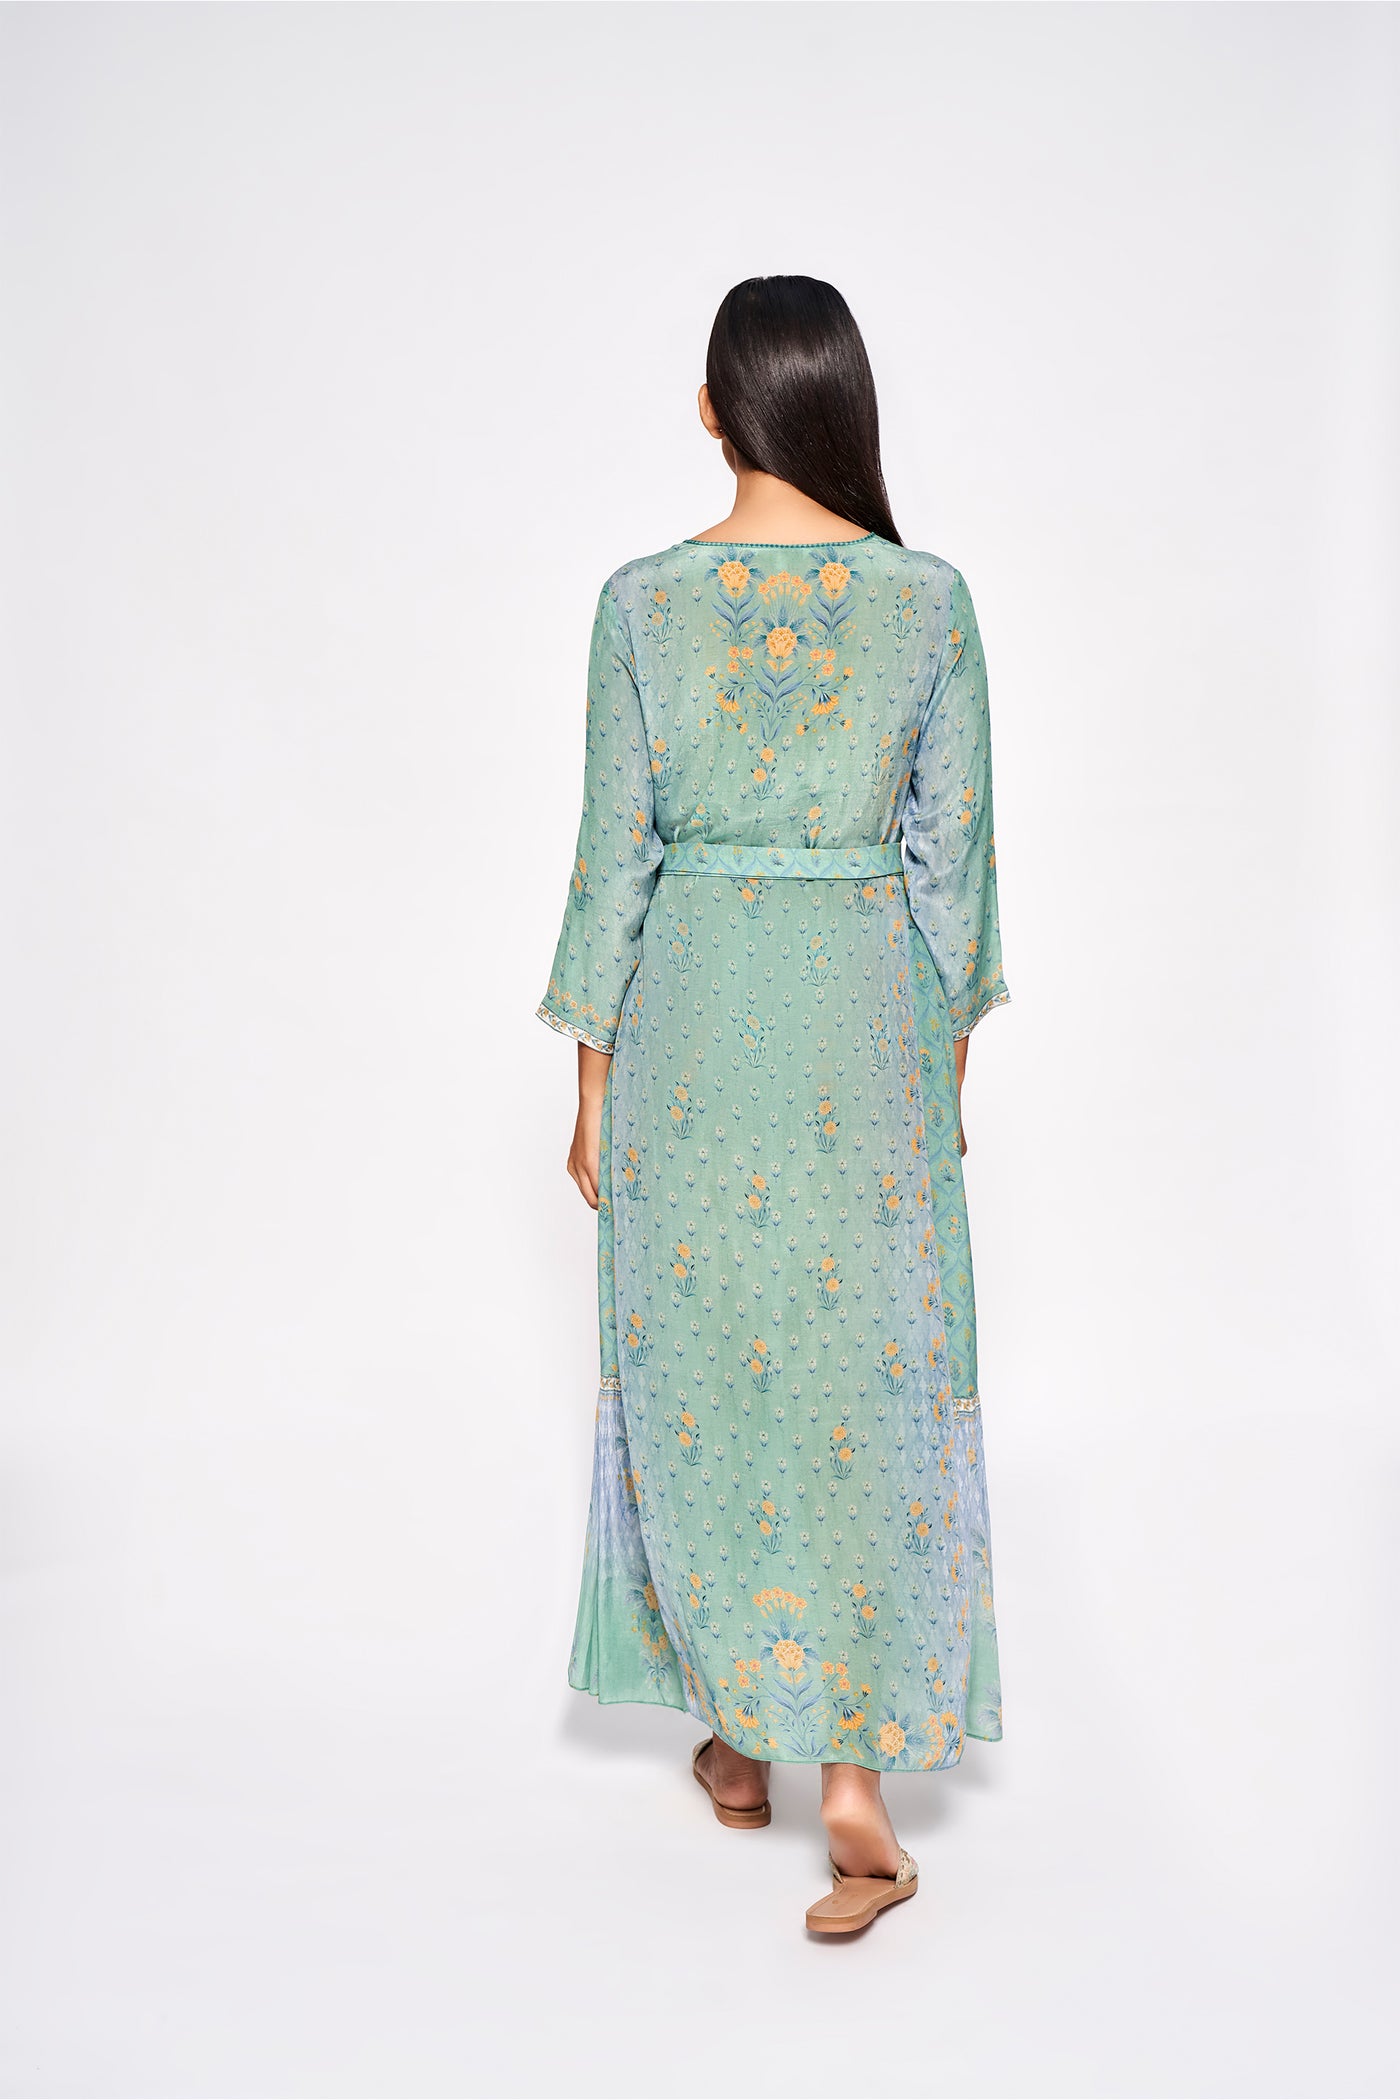 Anita Dongre Devina Dress Sea Foam western indian designer wear online shopping melange singapore